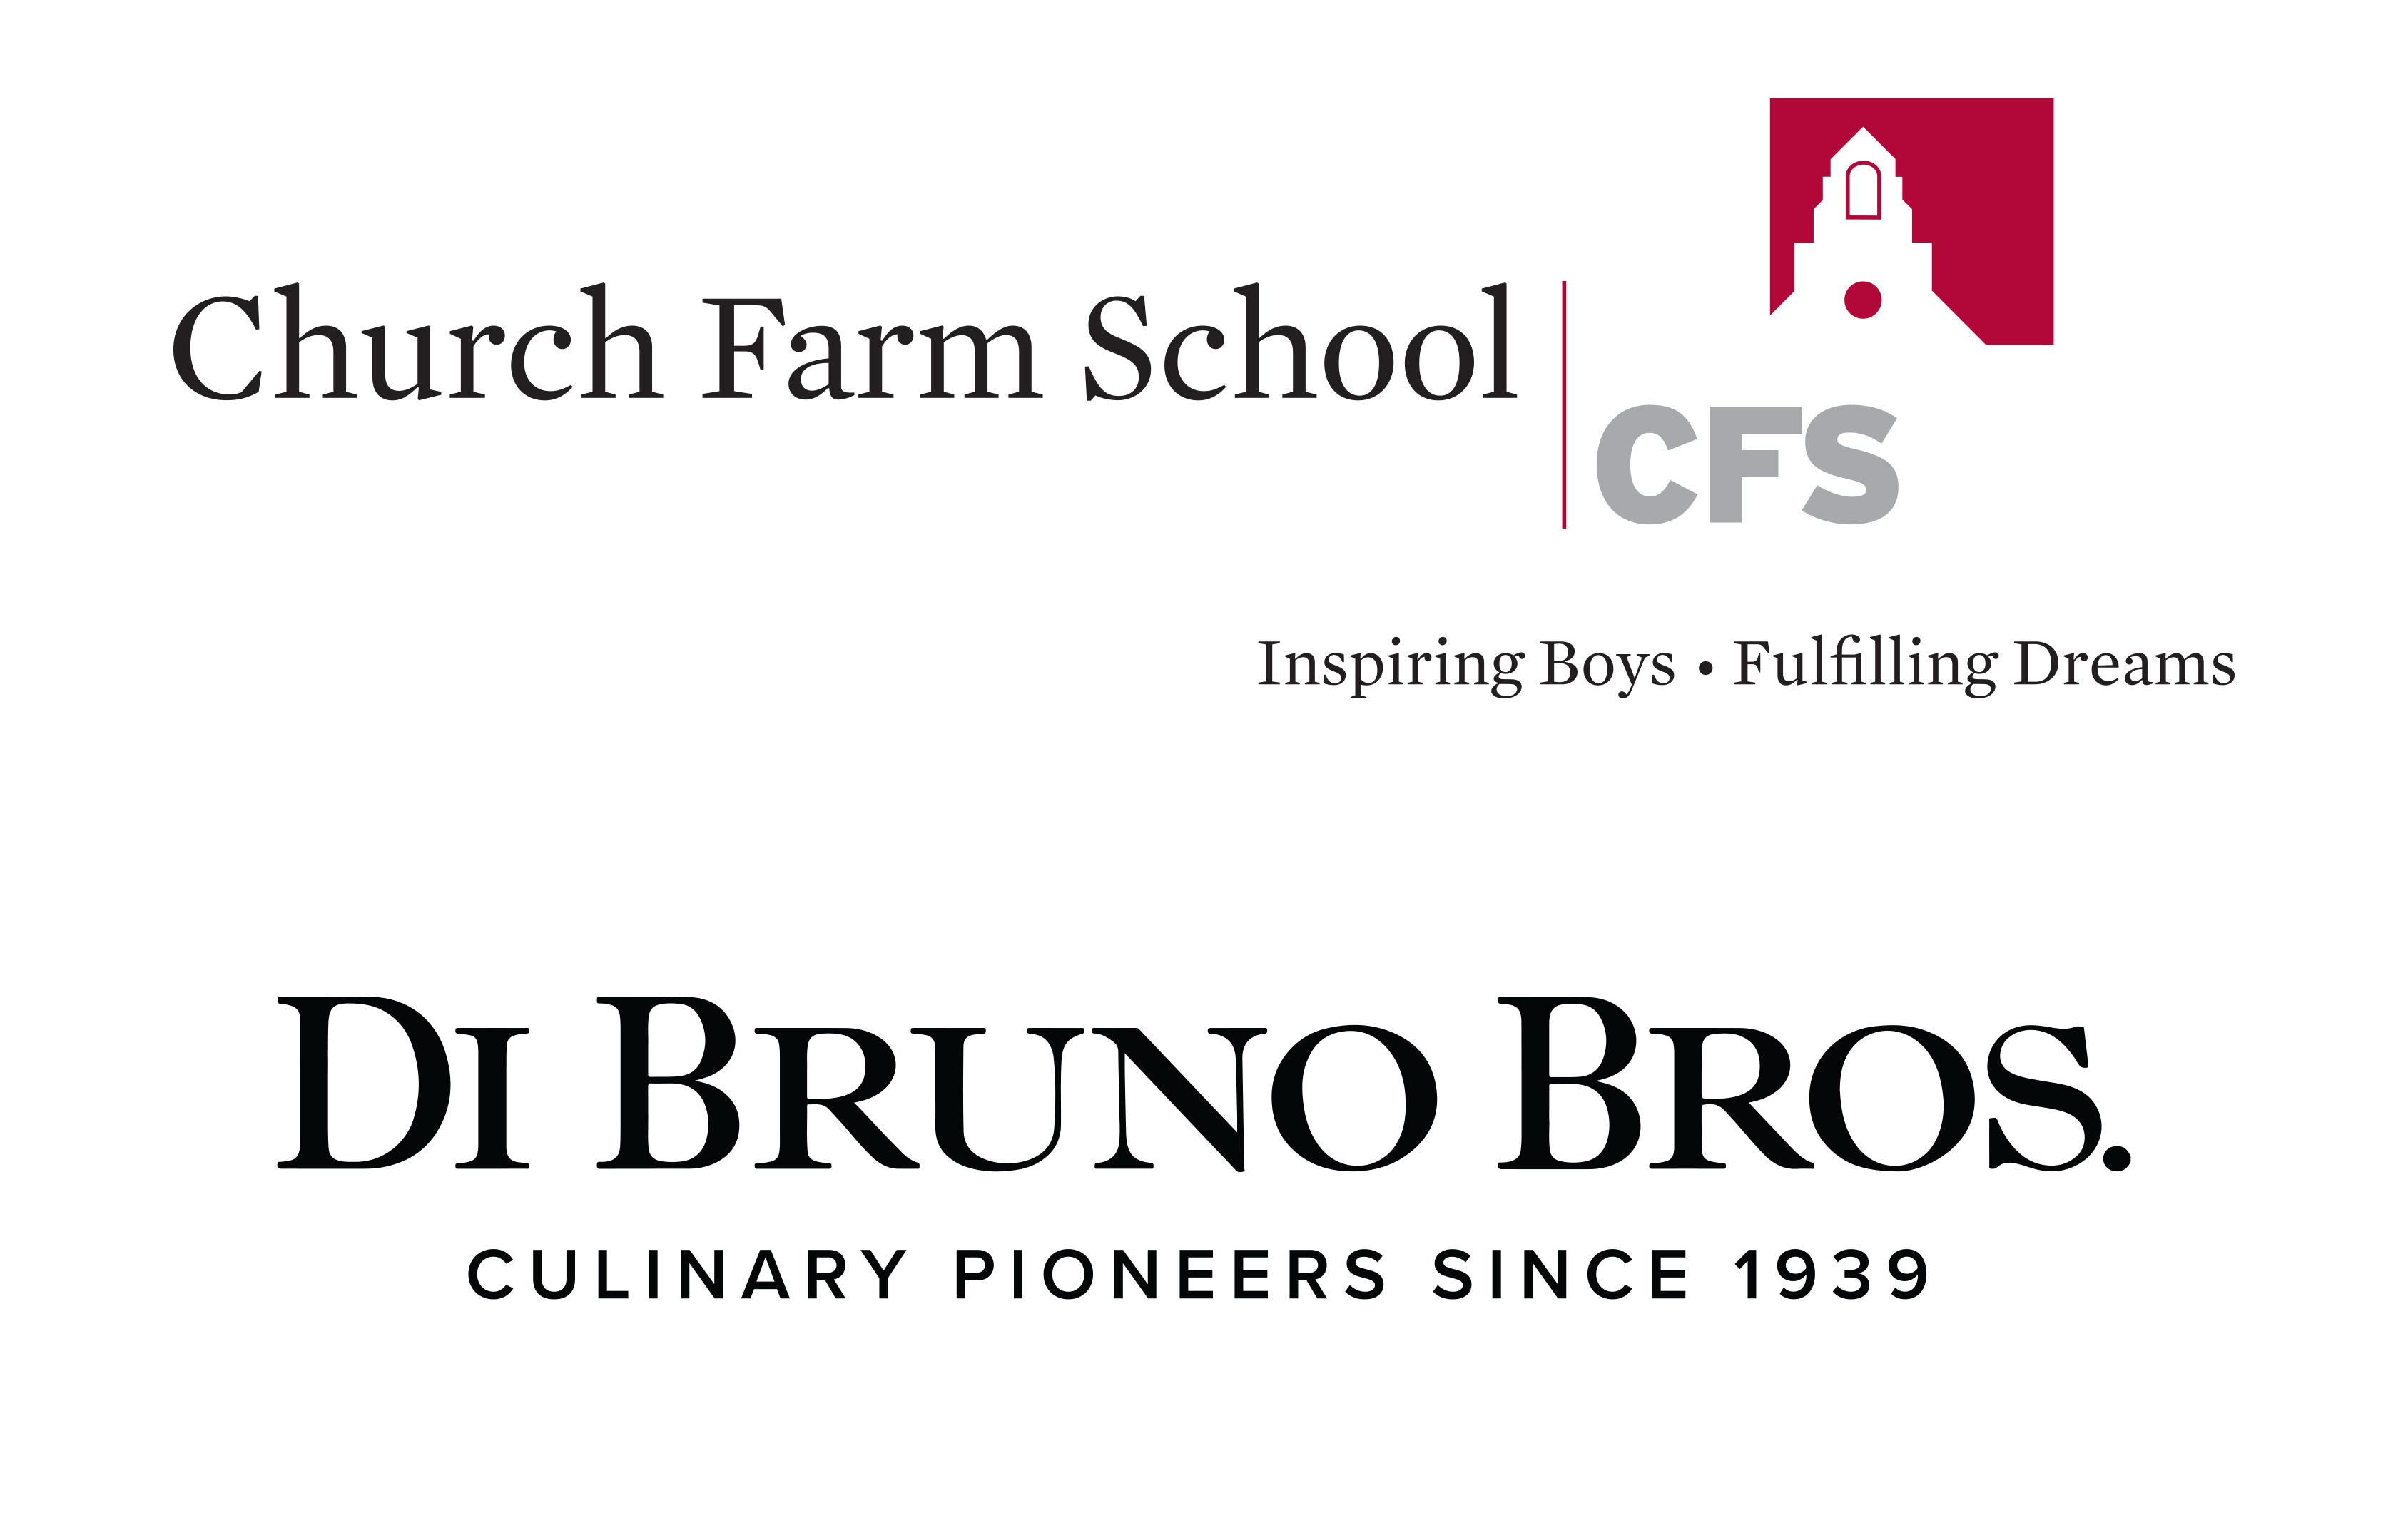 logos for Di Bruno Bros and Church Farm School